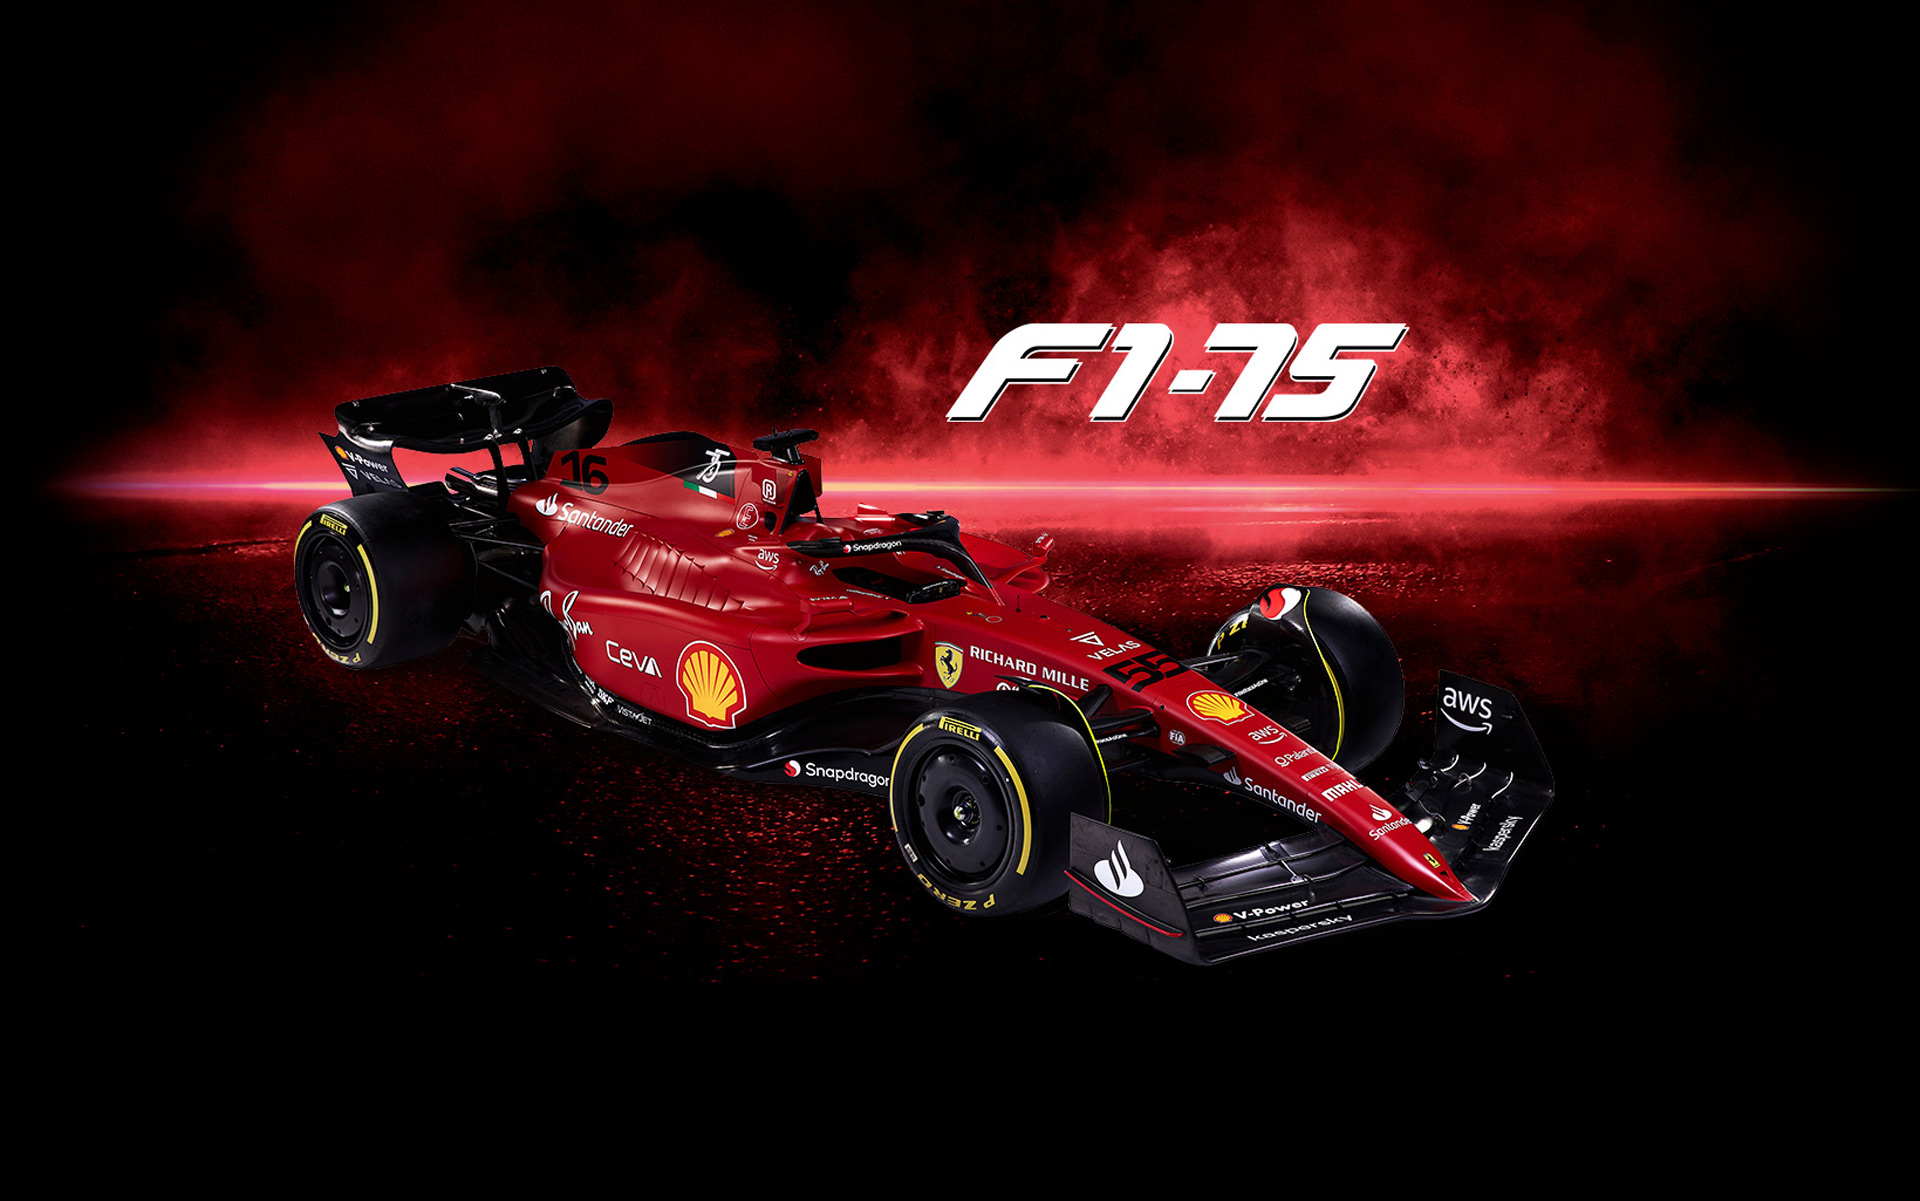 2022 Ferrari F1-75 Formula One race car makes debut